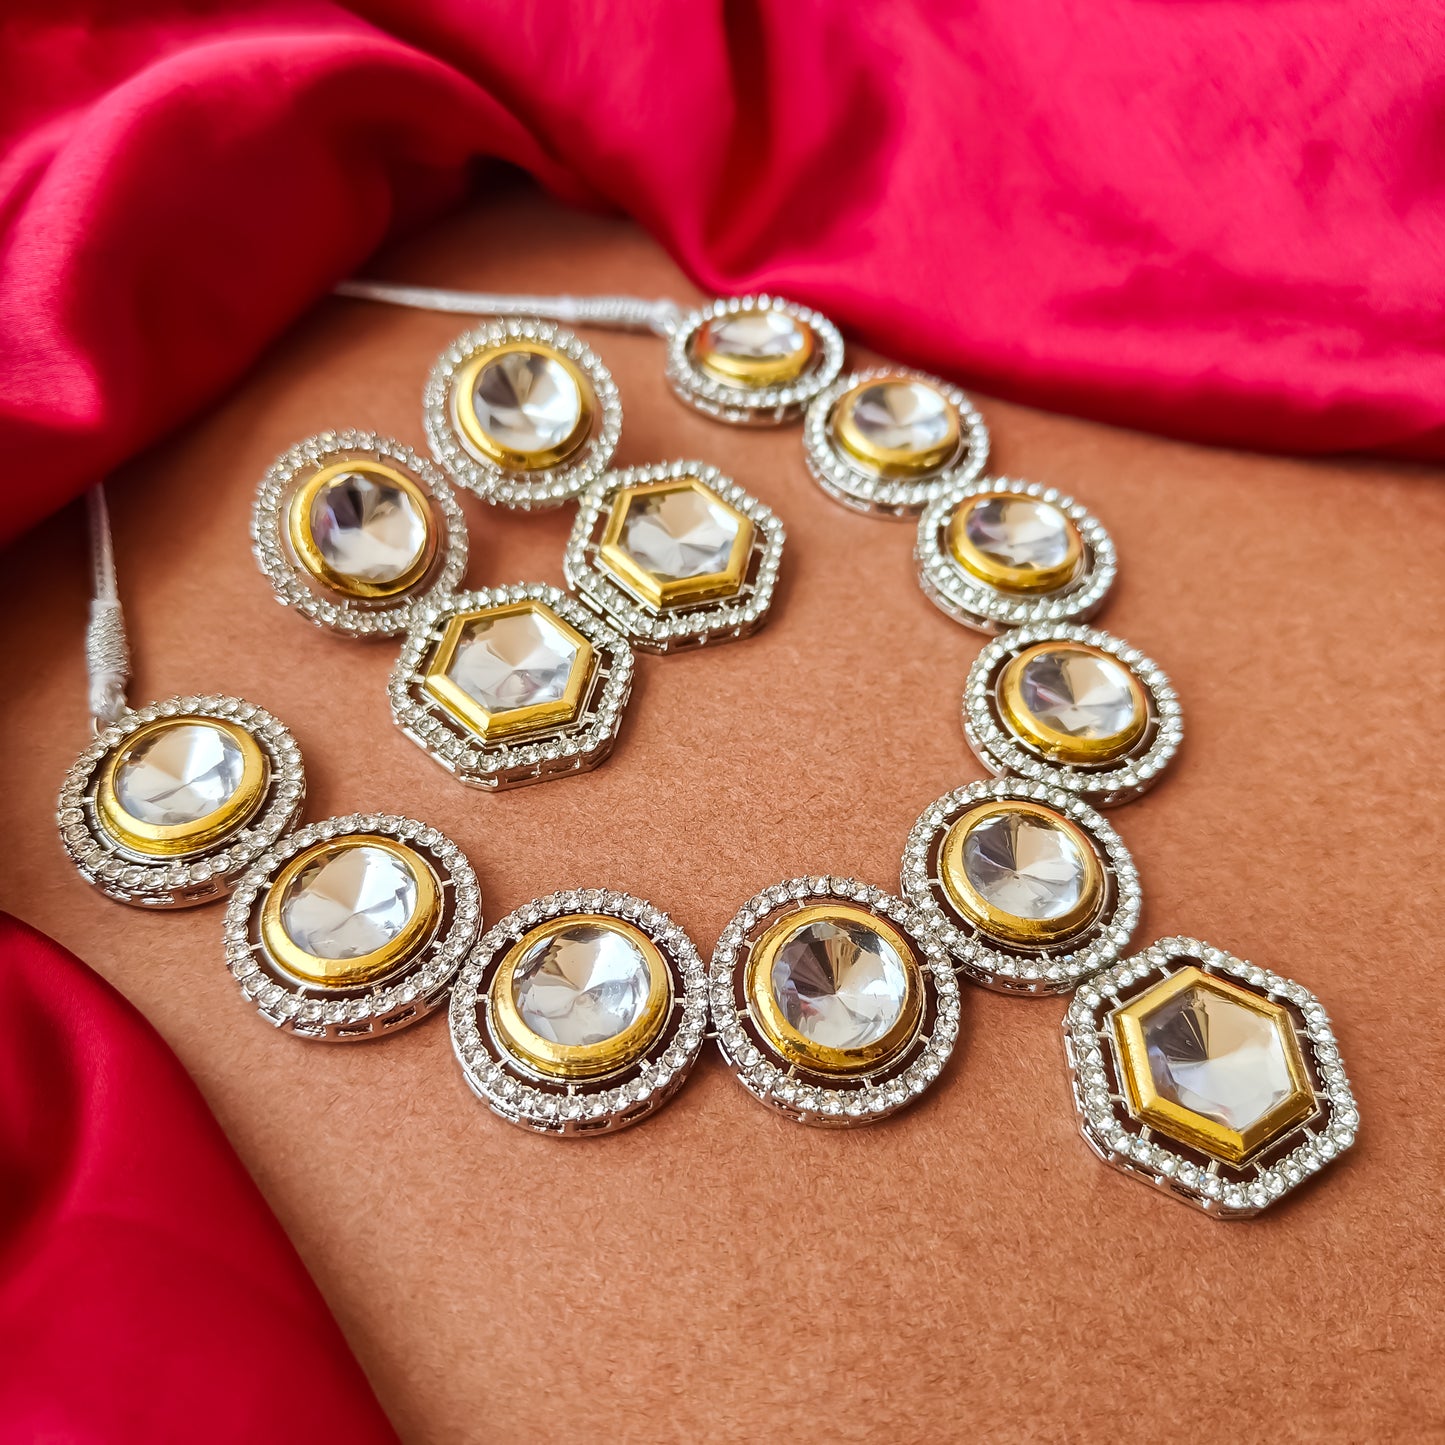 Shimi Polki Look Alike Necklace Set with Earrings